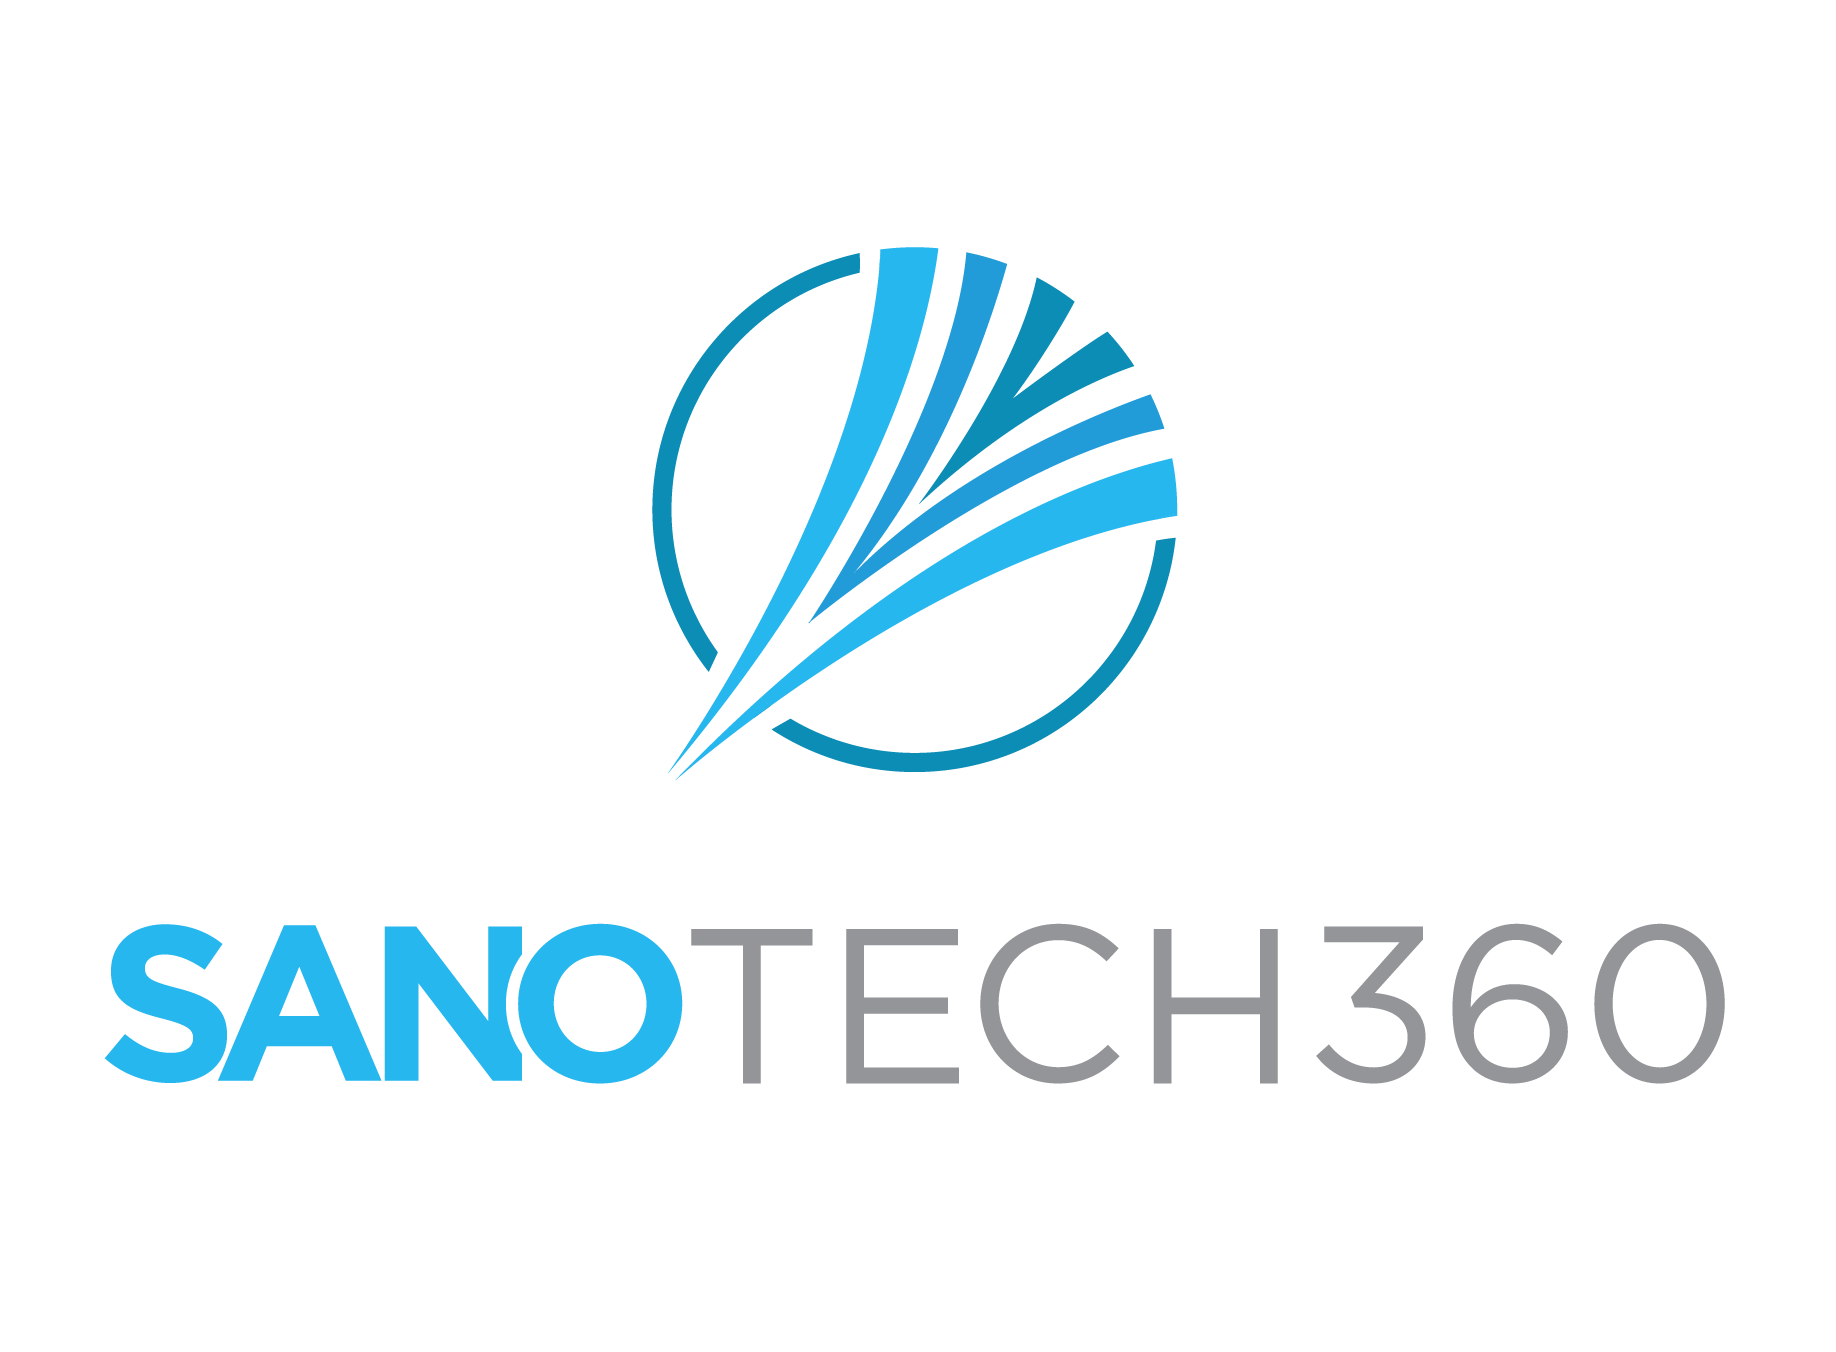 Sanotech 360 logo